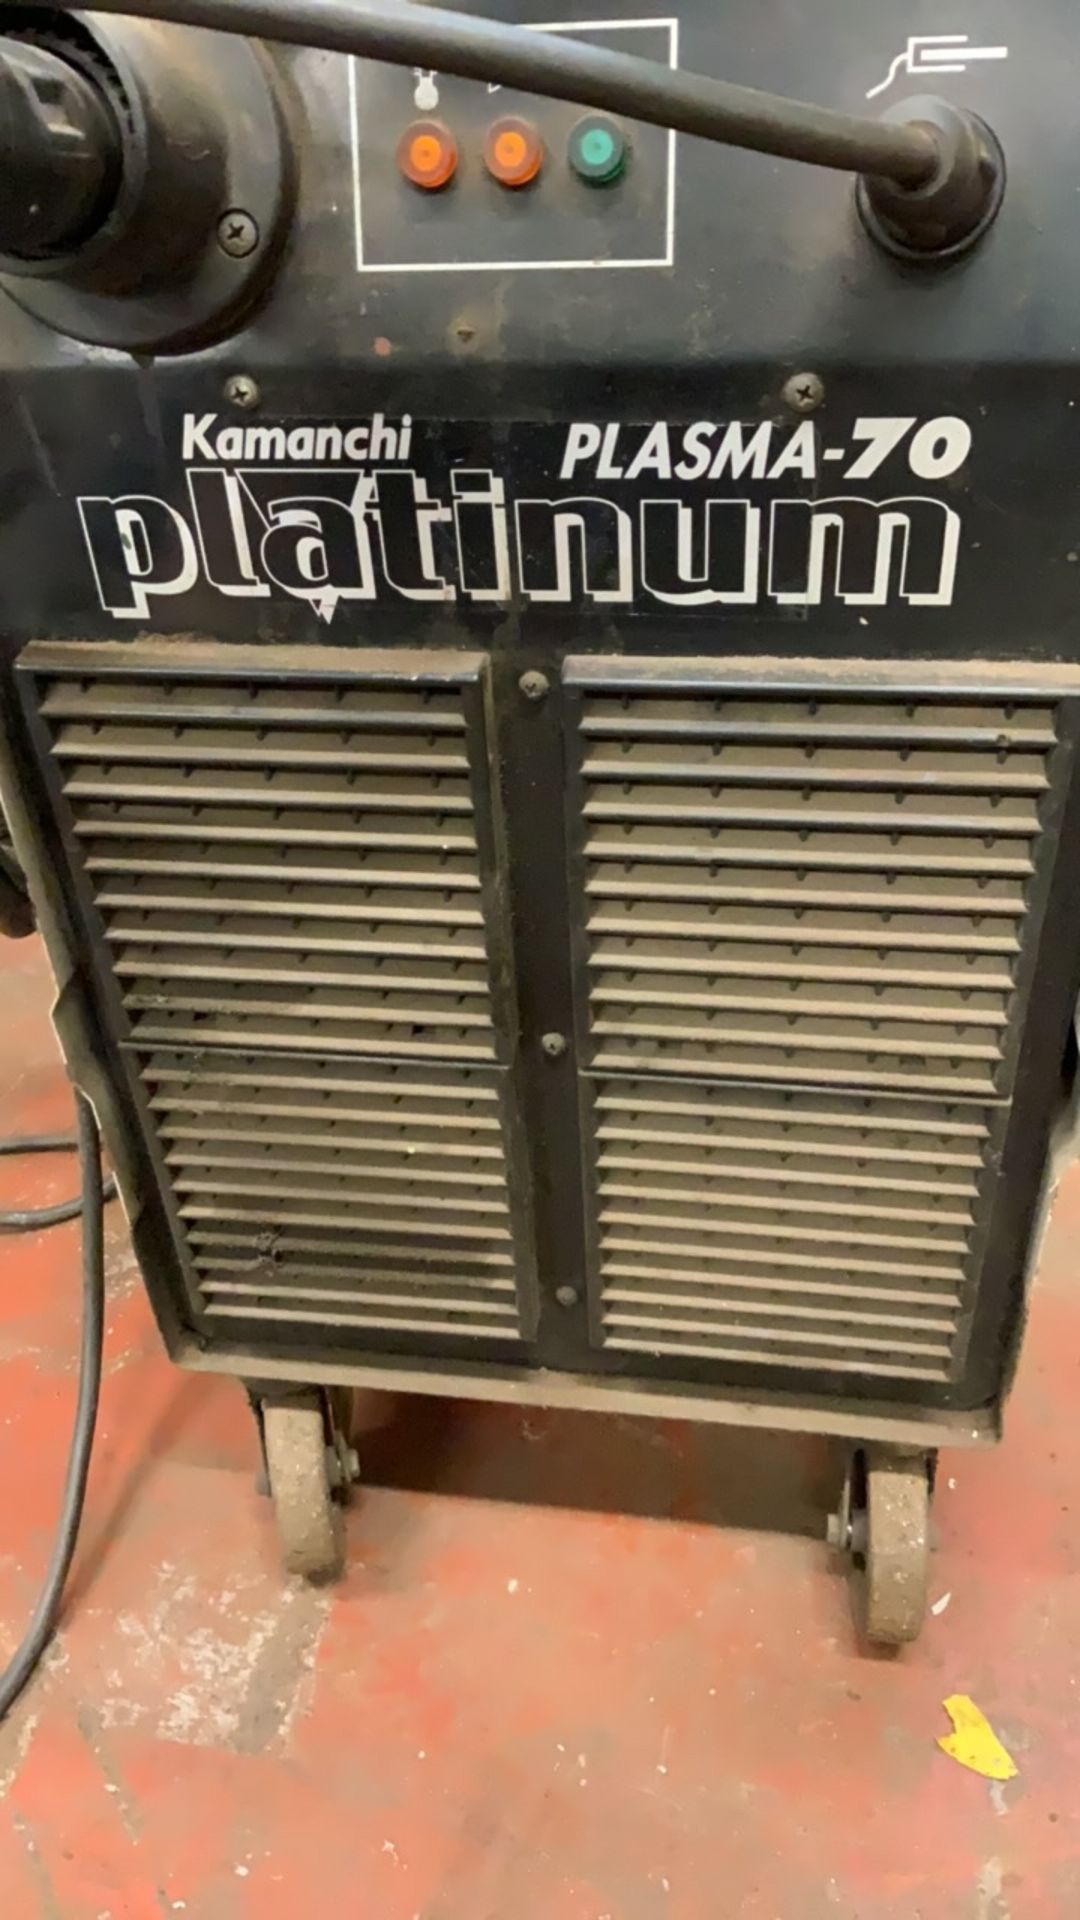 Kamanchi Platinum Plasma 70 Plasma Cutter, Serial No. G-01-500389 - Image 15 of 26